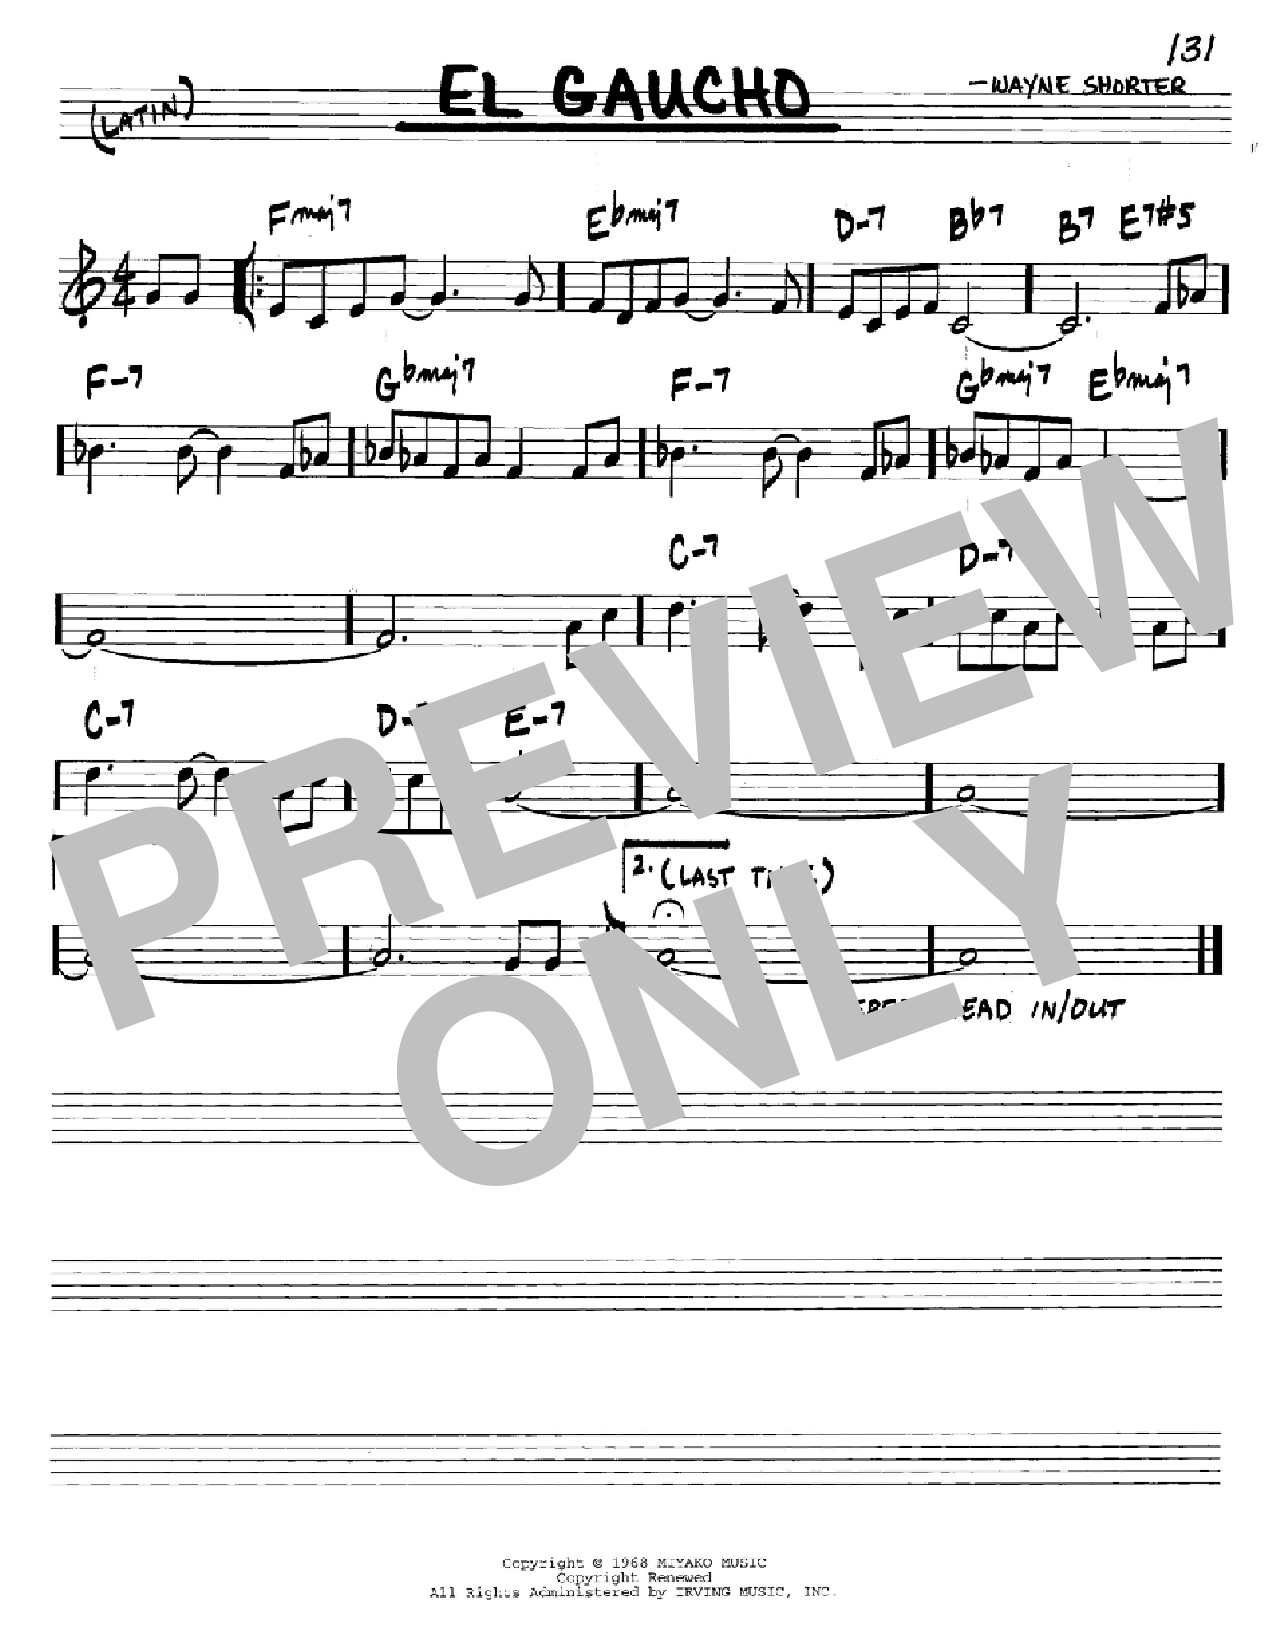 Wayne Shorter El Gaucho Sheet Music Notes & Chords for Real Book - Melody & Chords - C Instruments - Download or Print PDF